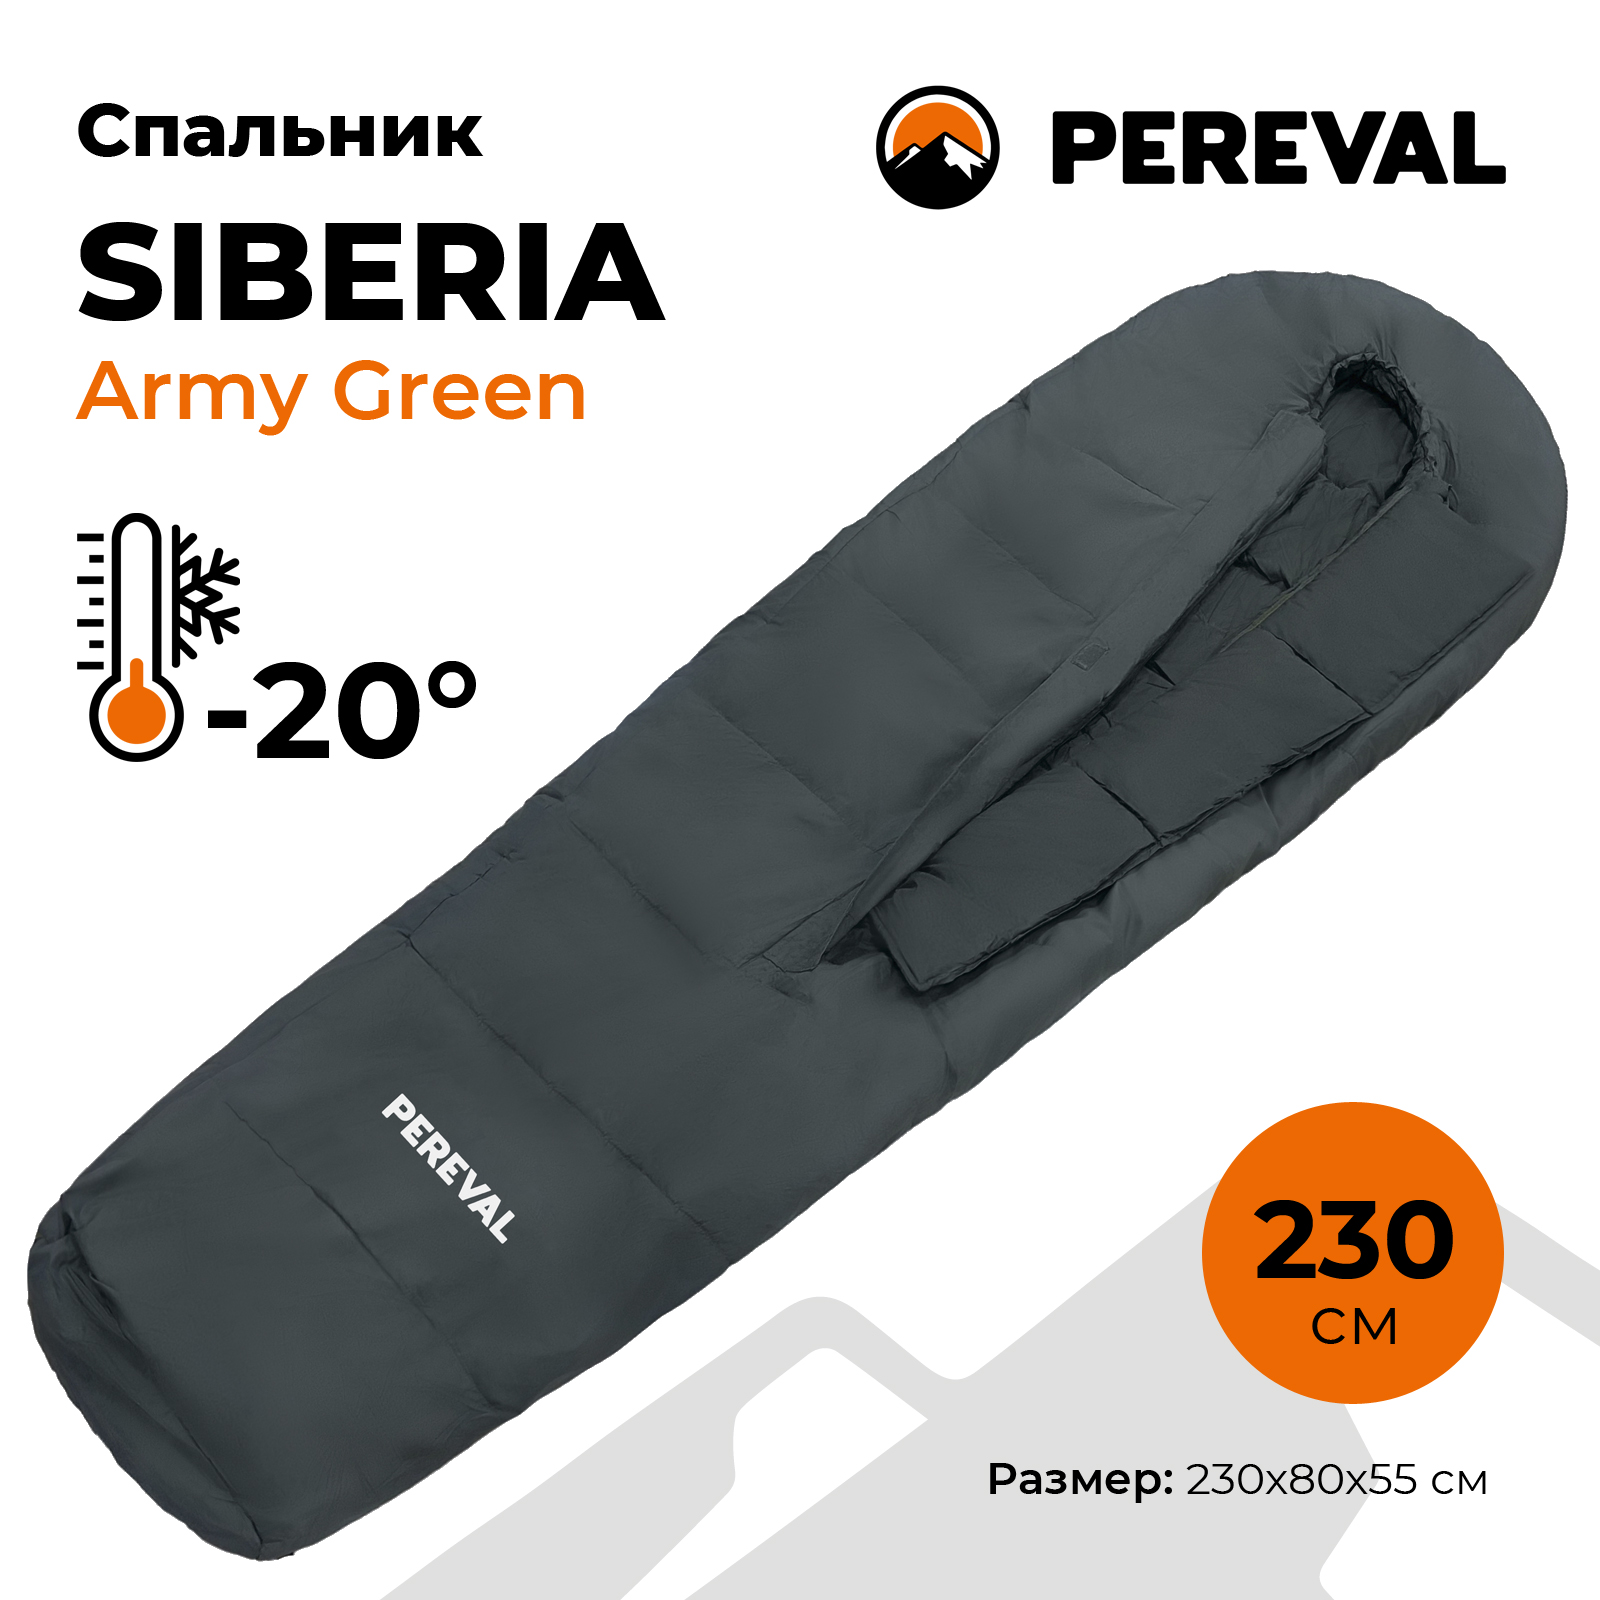 Спальник Pereval Siberia Army Green -20° - фото 1